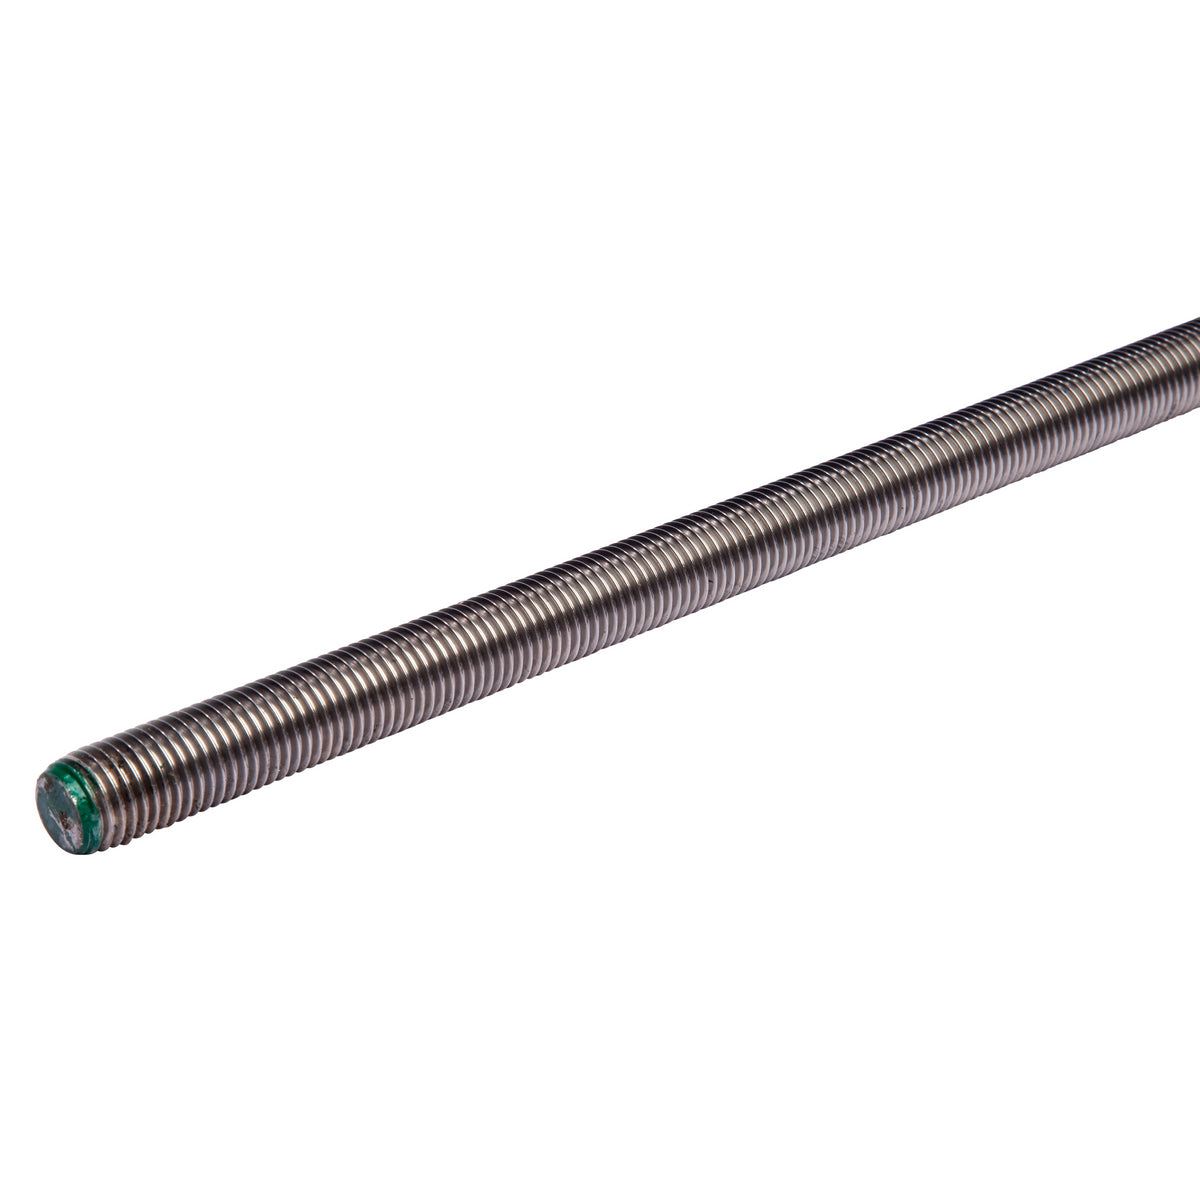 Stainless Steel Threaded Bar - M10 x 1 m